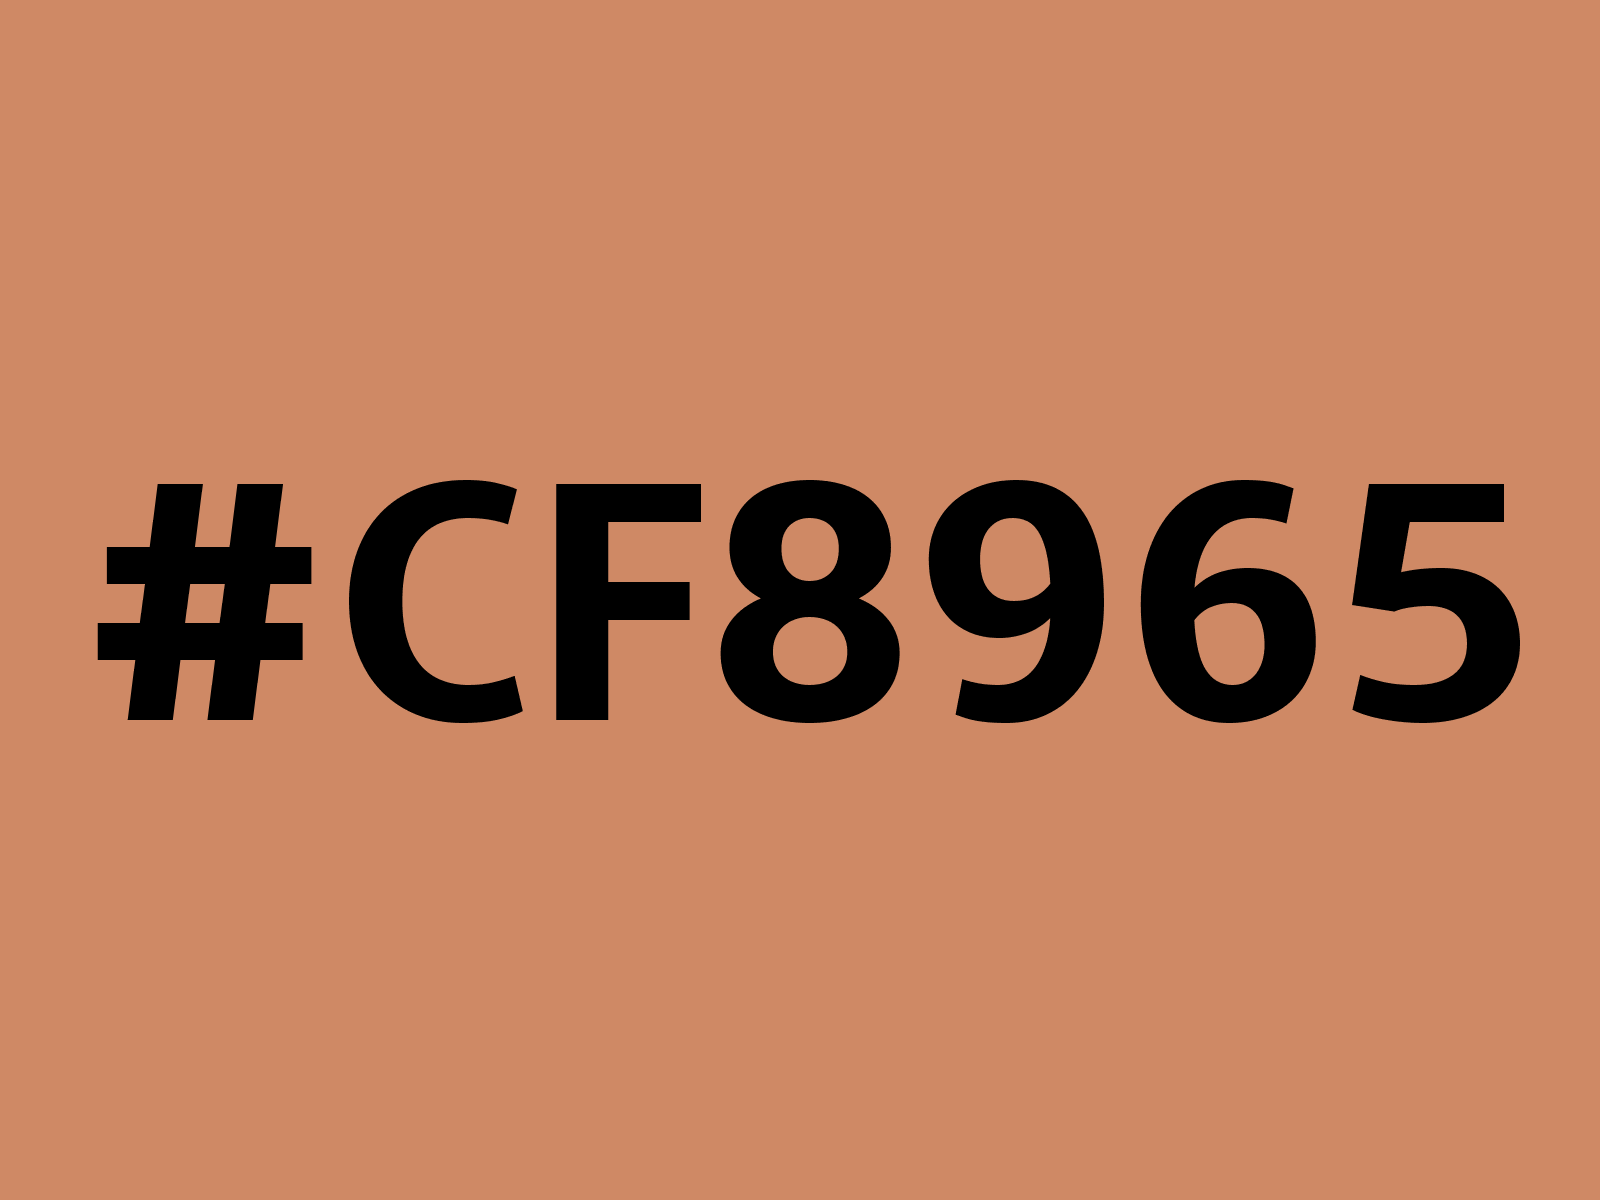 Converting Colors - Hex CF8965